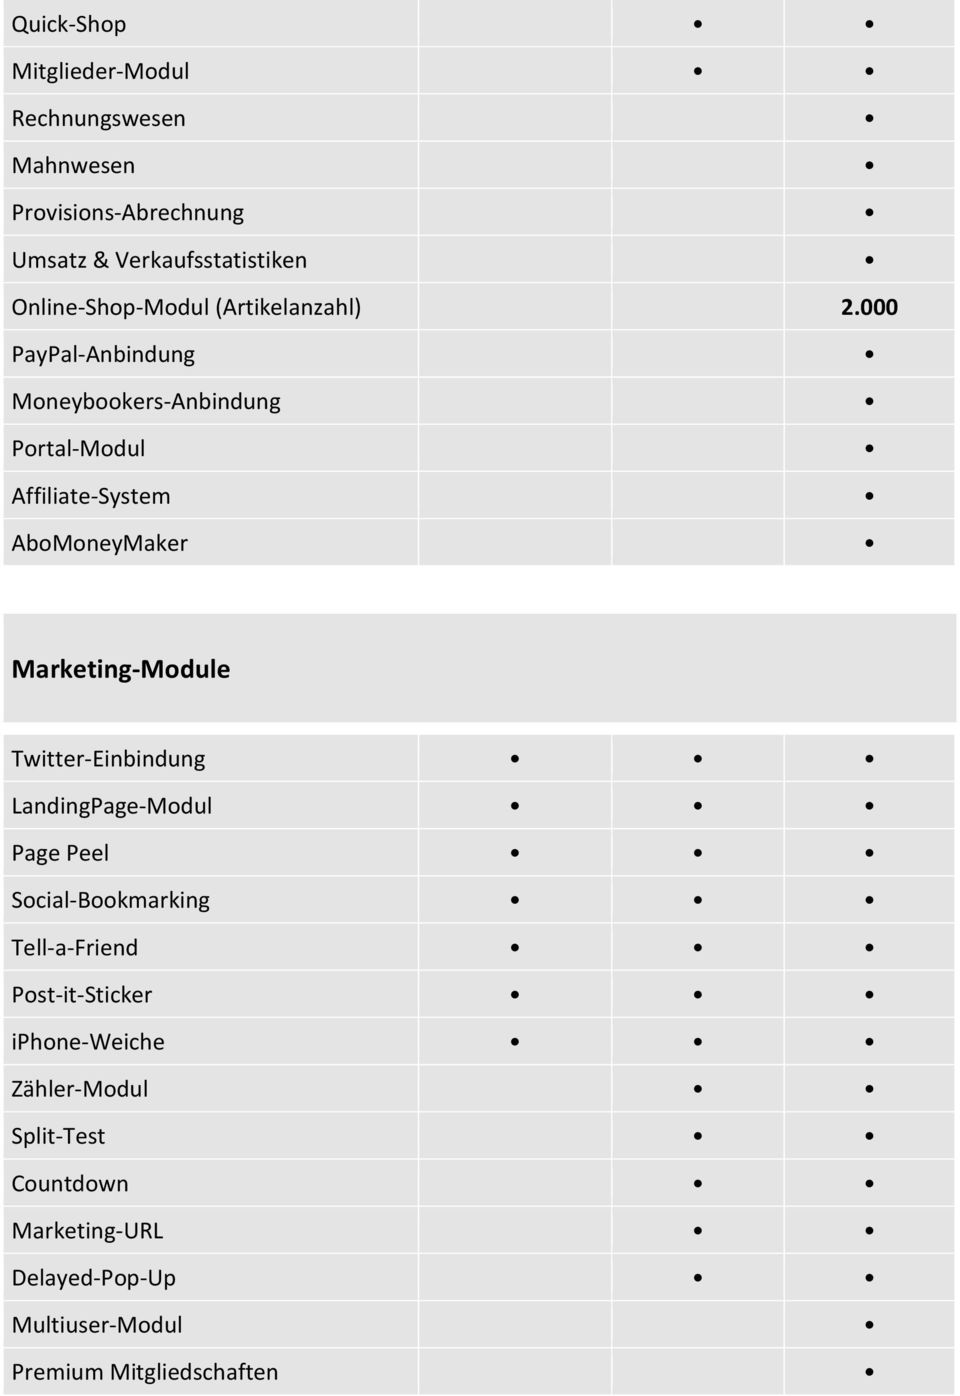 000 PayPal-Anbindung Moneybookers-Anbindung Portal-Modul Affiliate-System AboMoneyMaker Marketing-Module